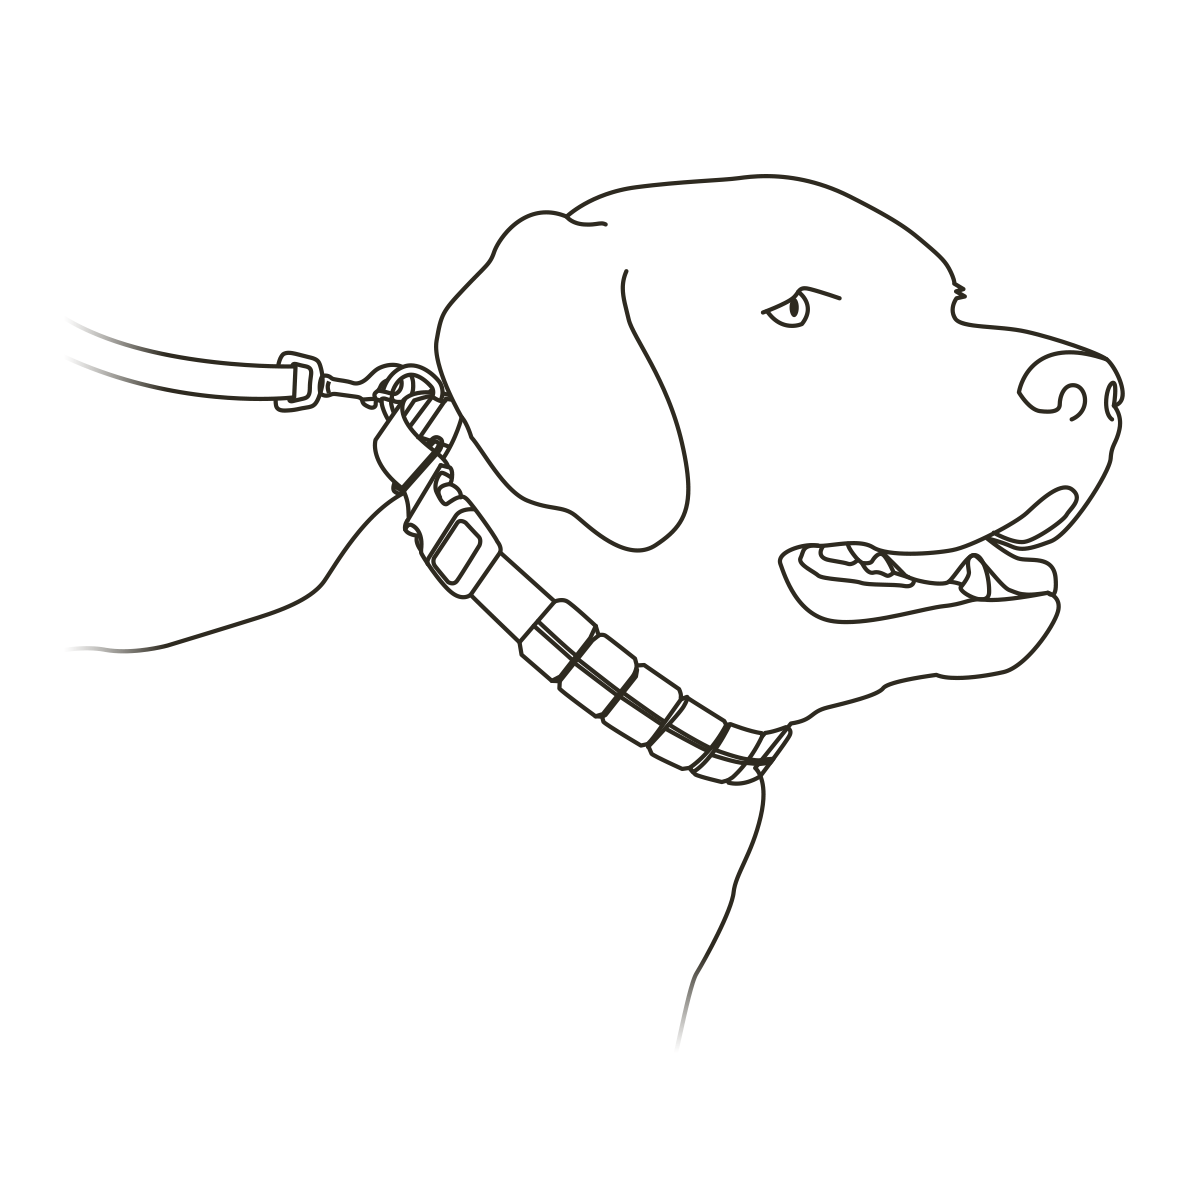 fit-soft-point-training collar-to-dog-illustration4